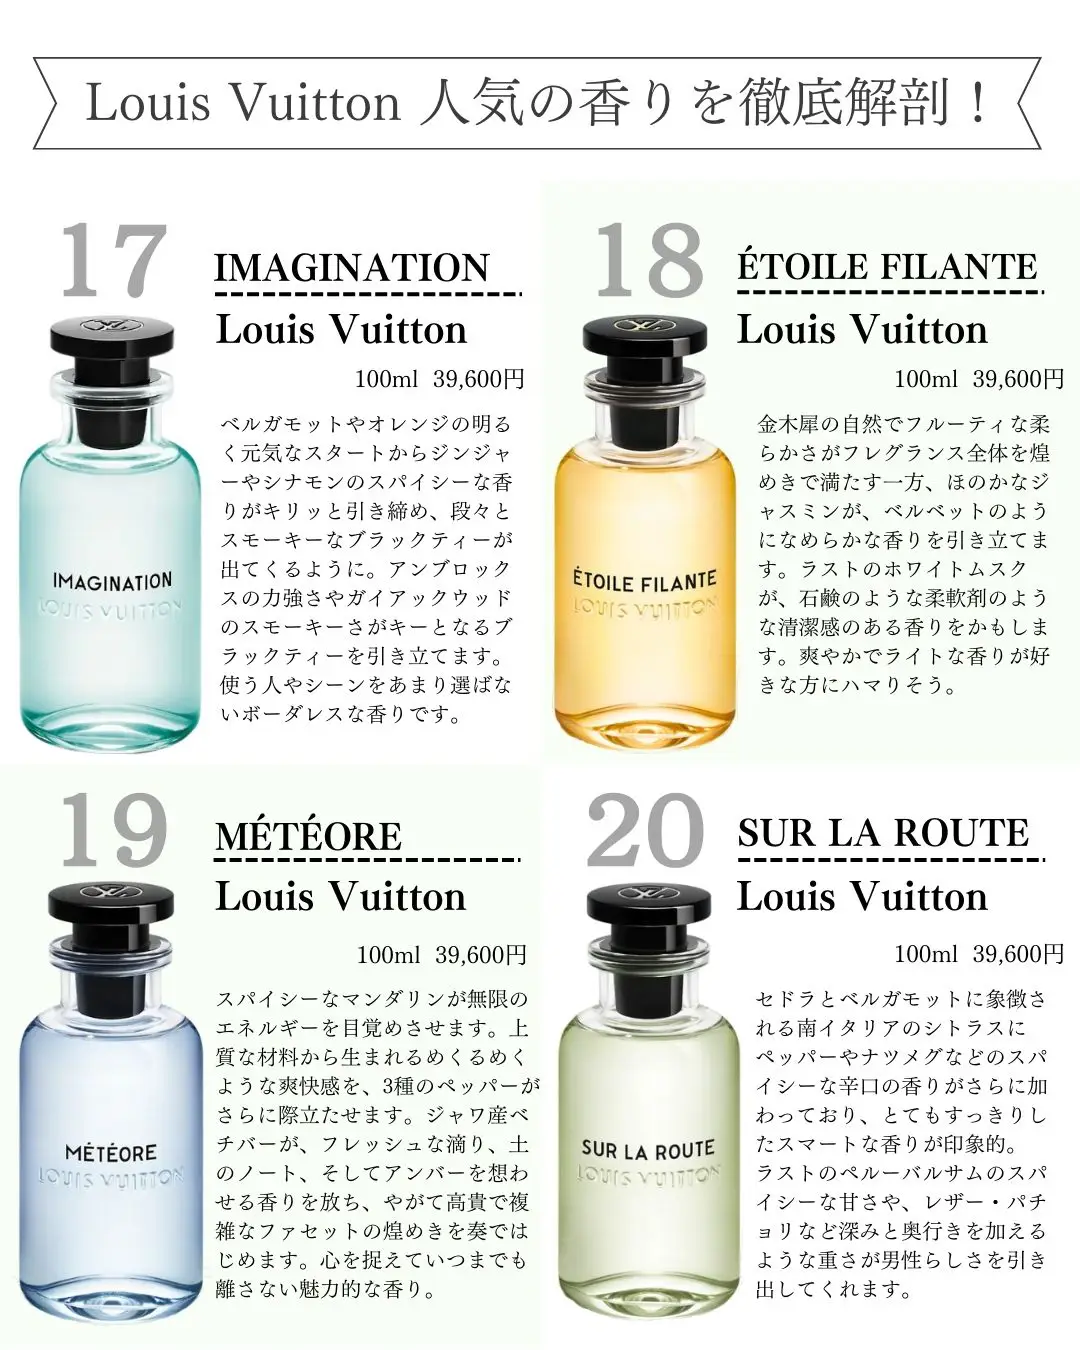 Louis Vuitton Meteore Basenotes